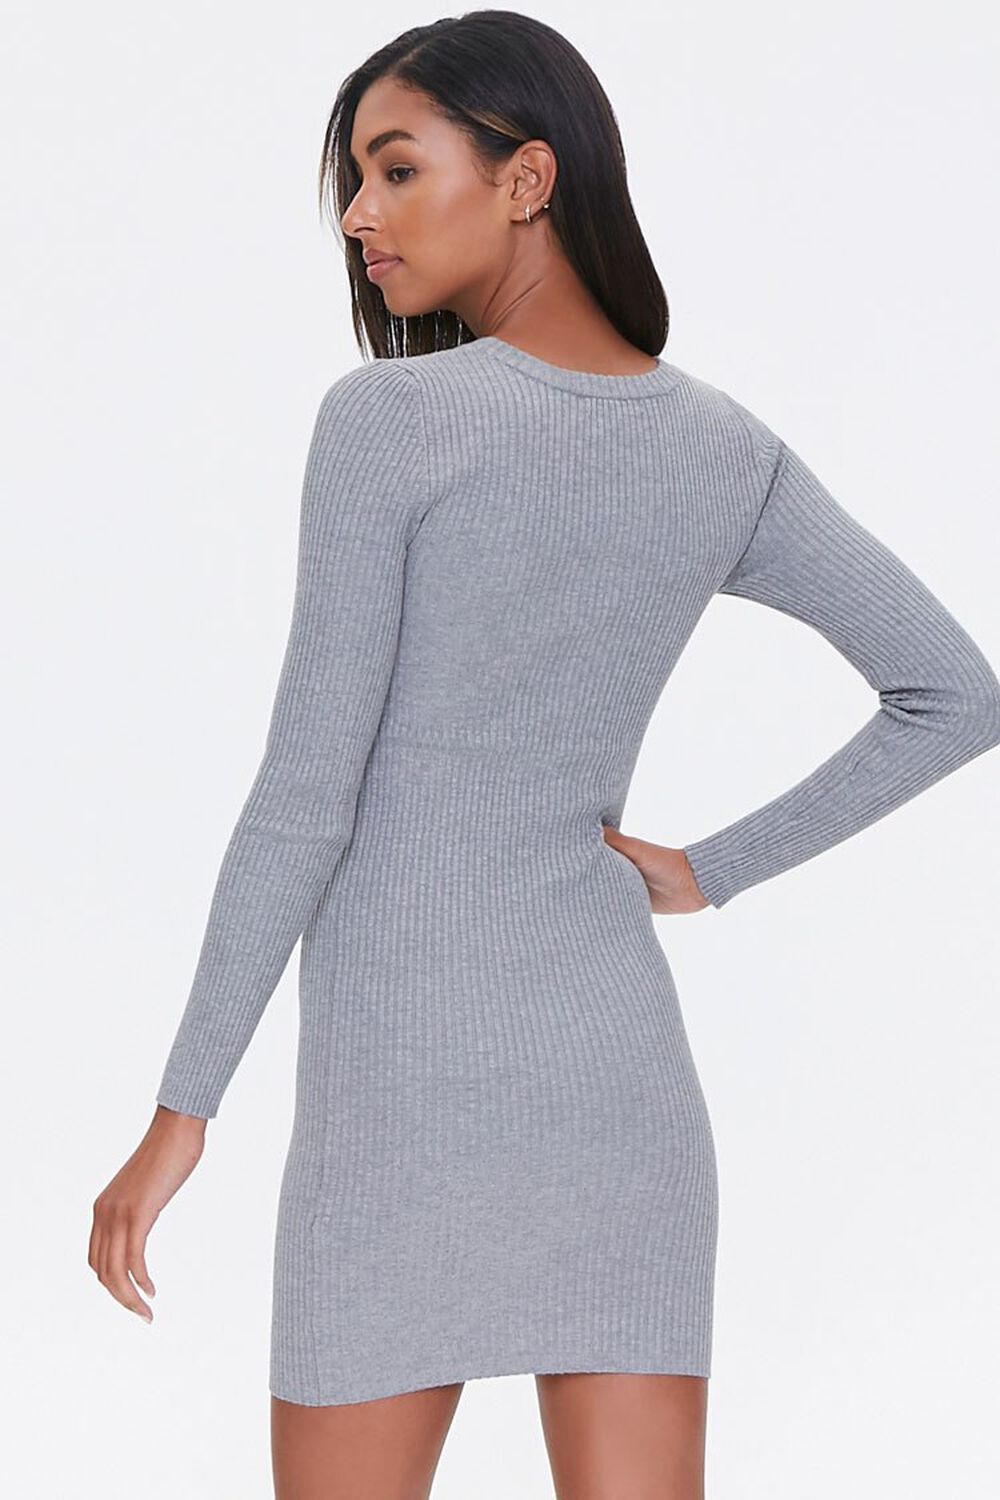 HEATHER GREY Sweater-Knit Mini Dress, image 3